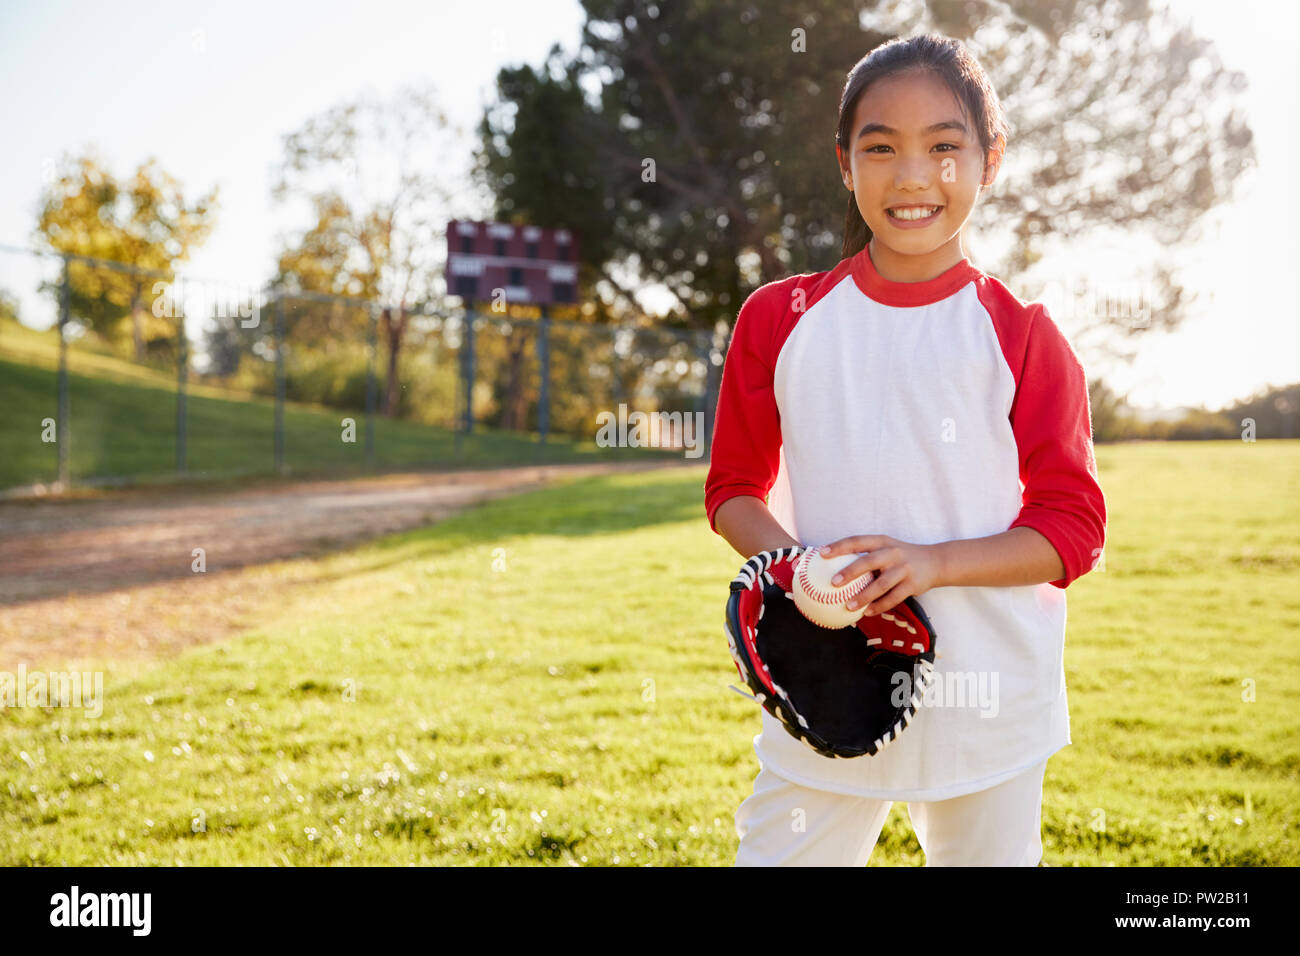 Chinese schoolgirl holding baseball and mitt smiling Stock Photo